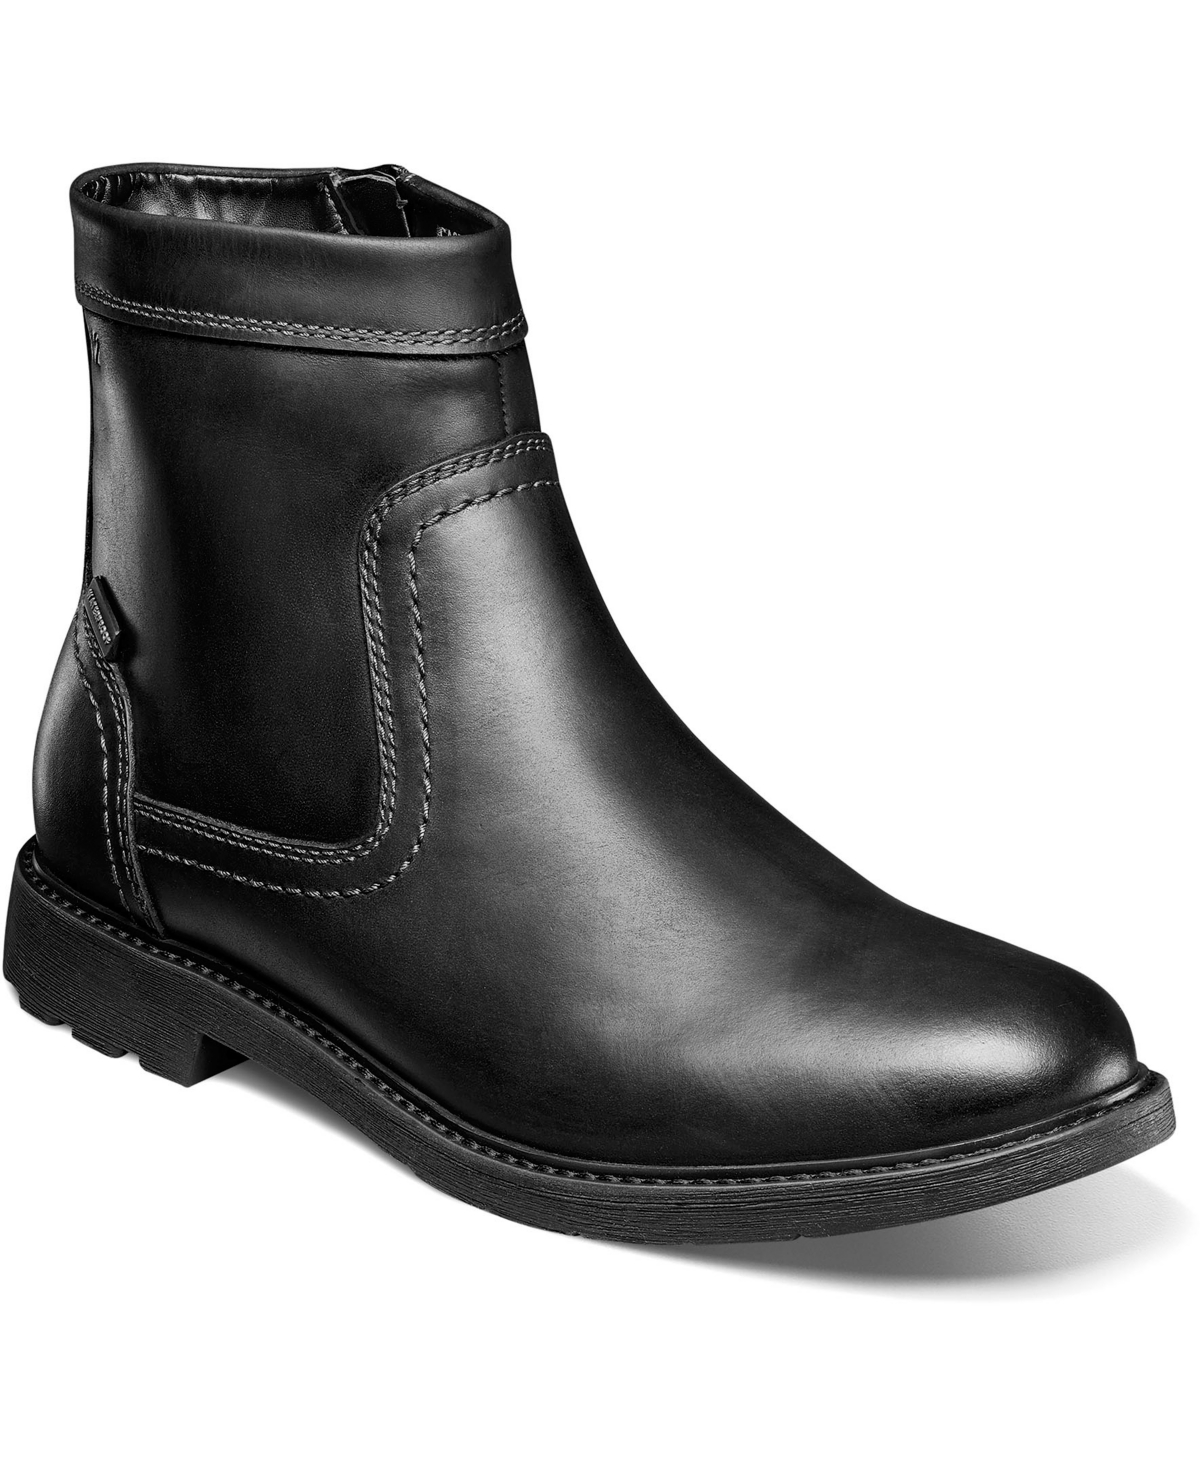 Men's 1912 Water-Resistant Leather Plain Toe Side Zip Boots - Black Crazy Horse